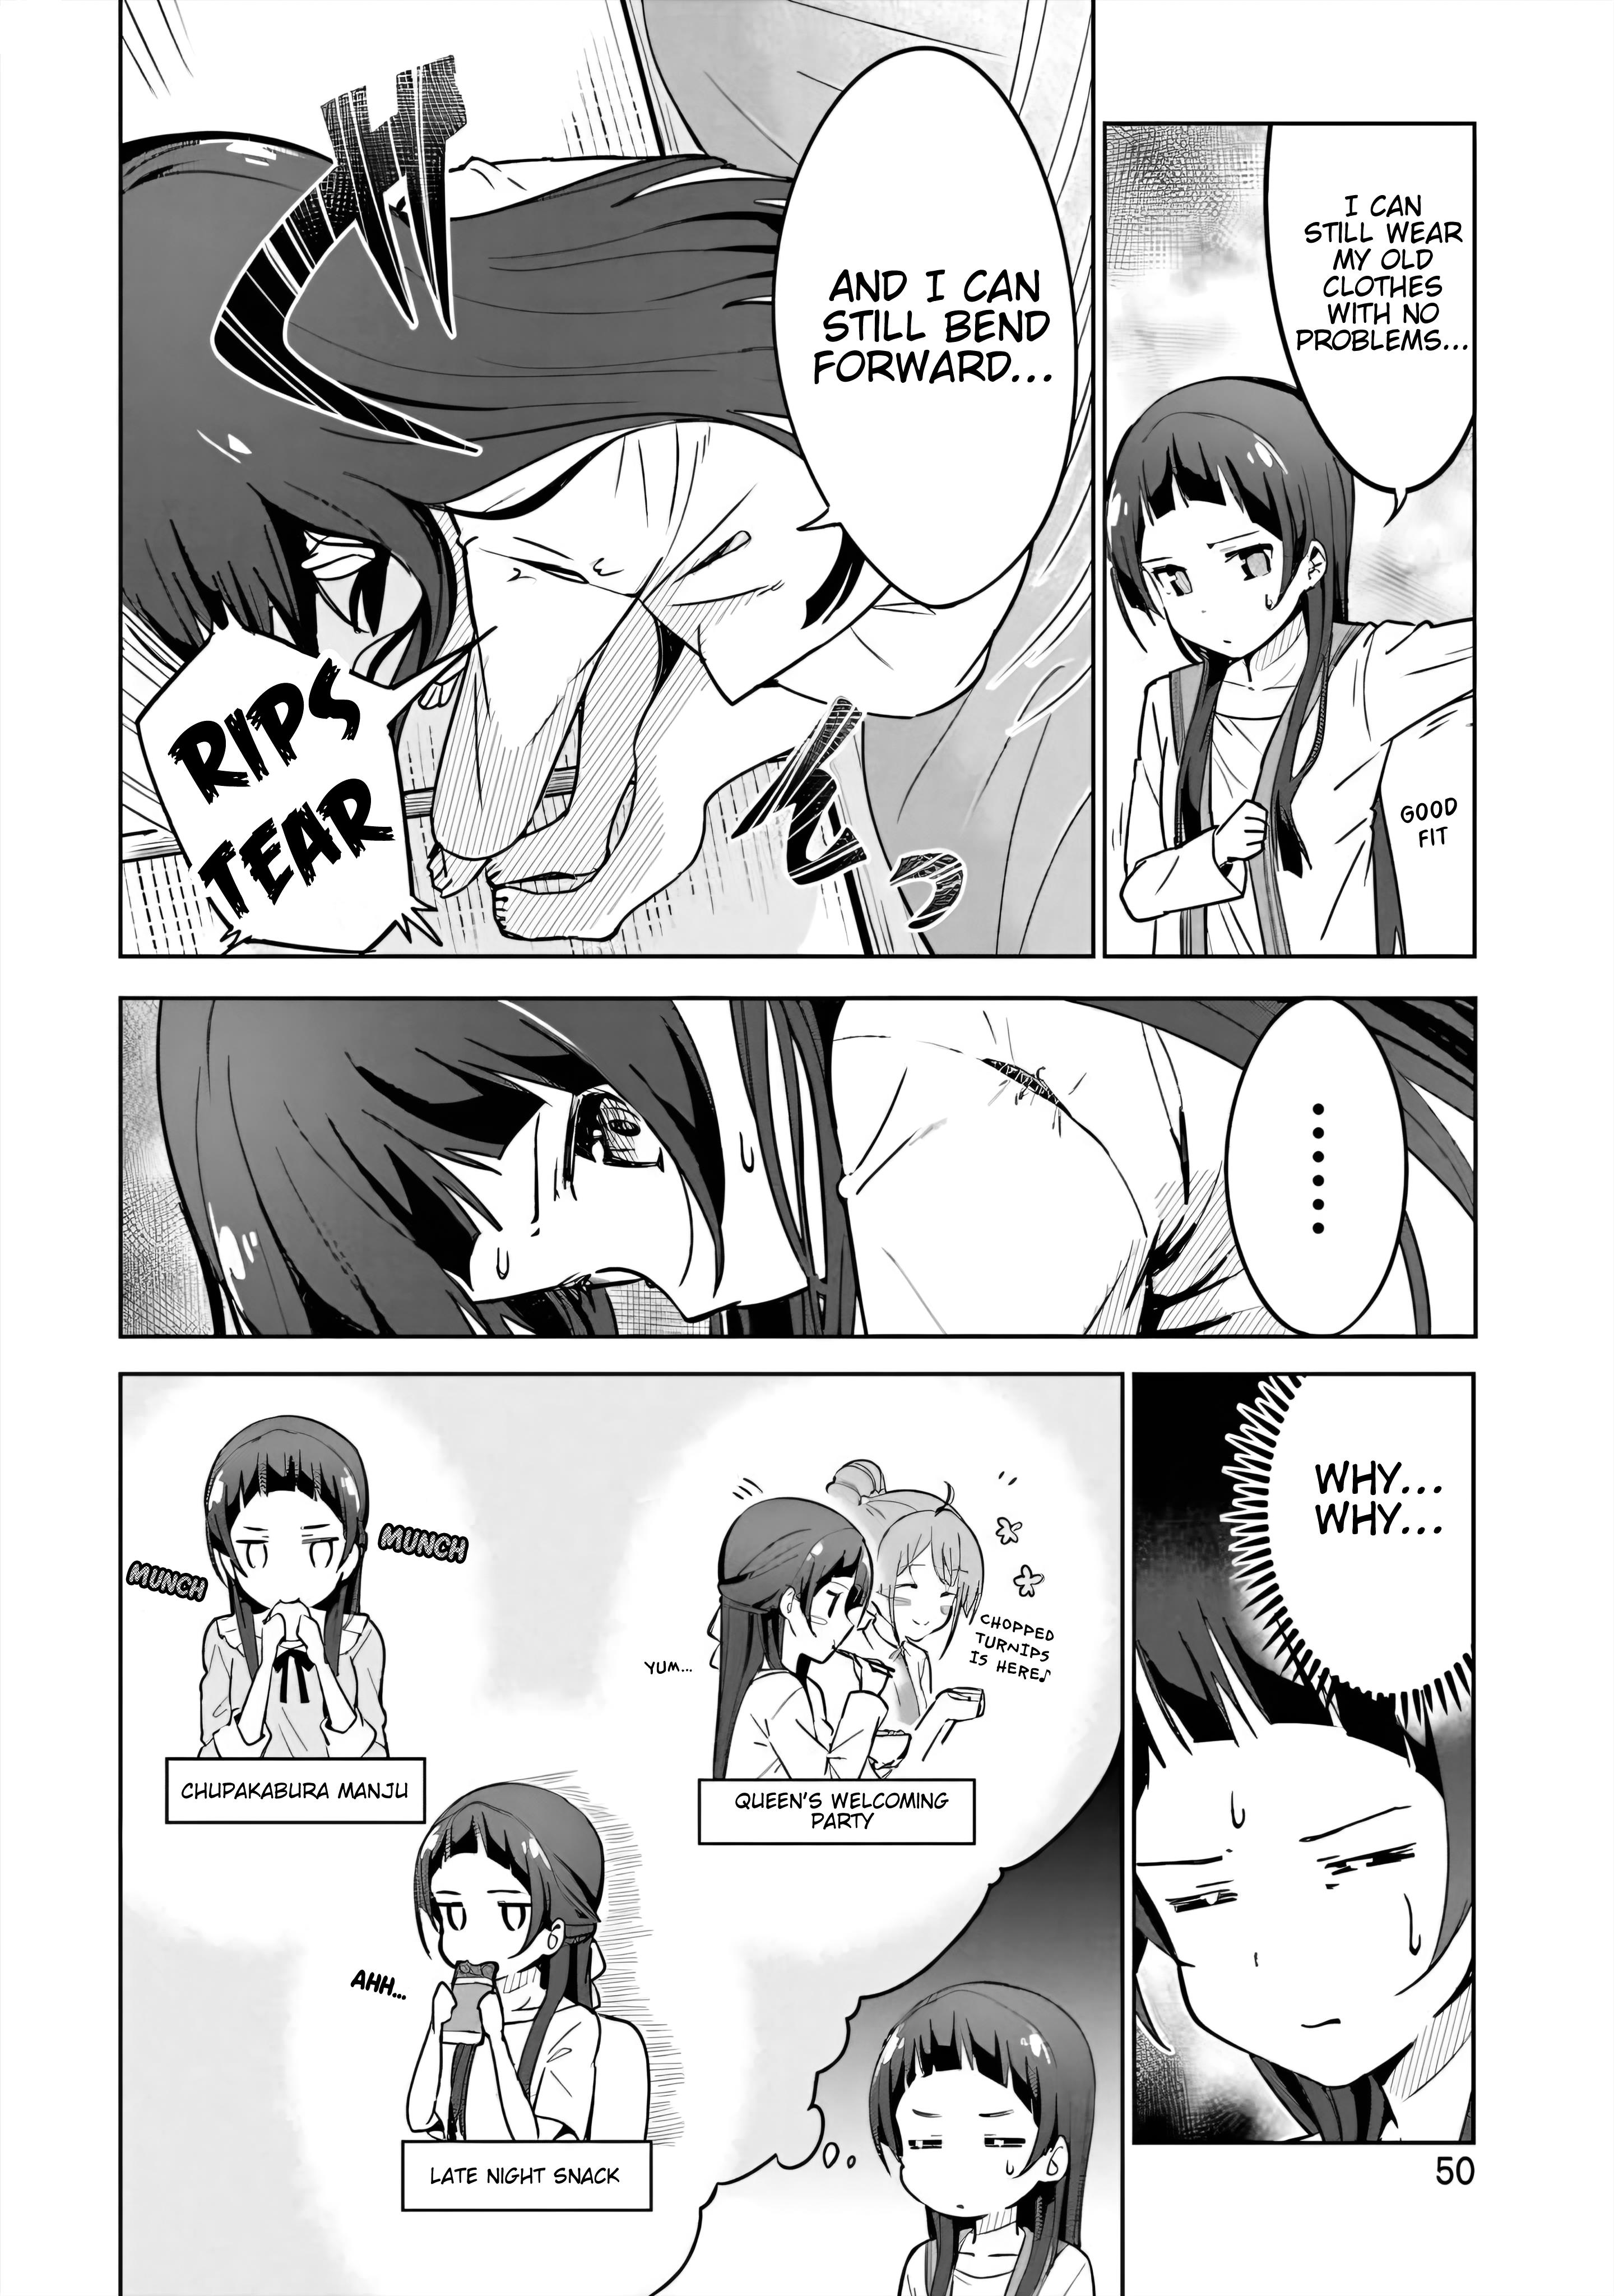 Sakura Quest Side Story: Ririko Oribe's Daily Report Vol 1 Chapter 4 #4